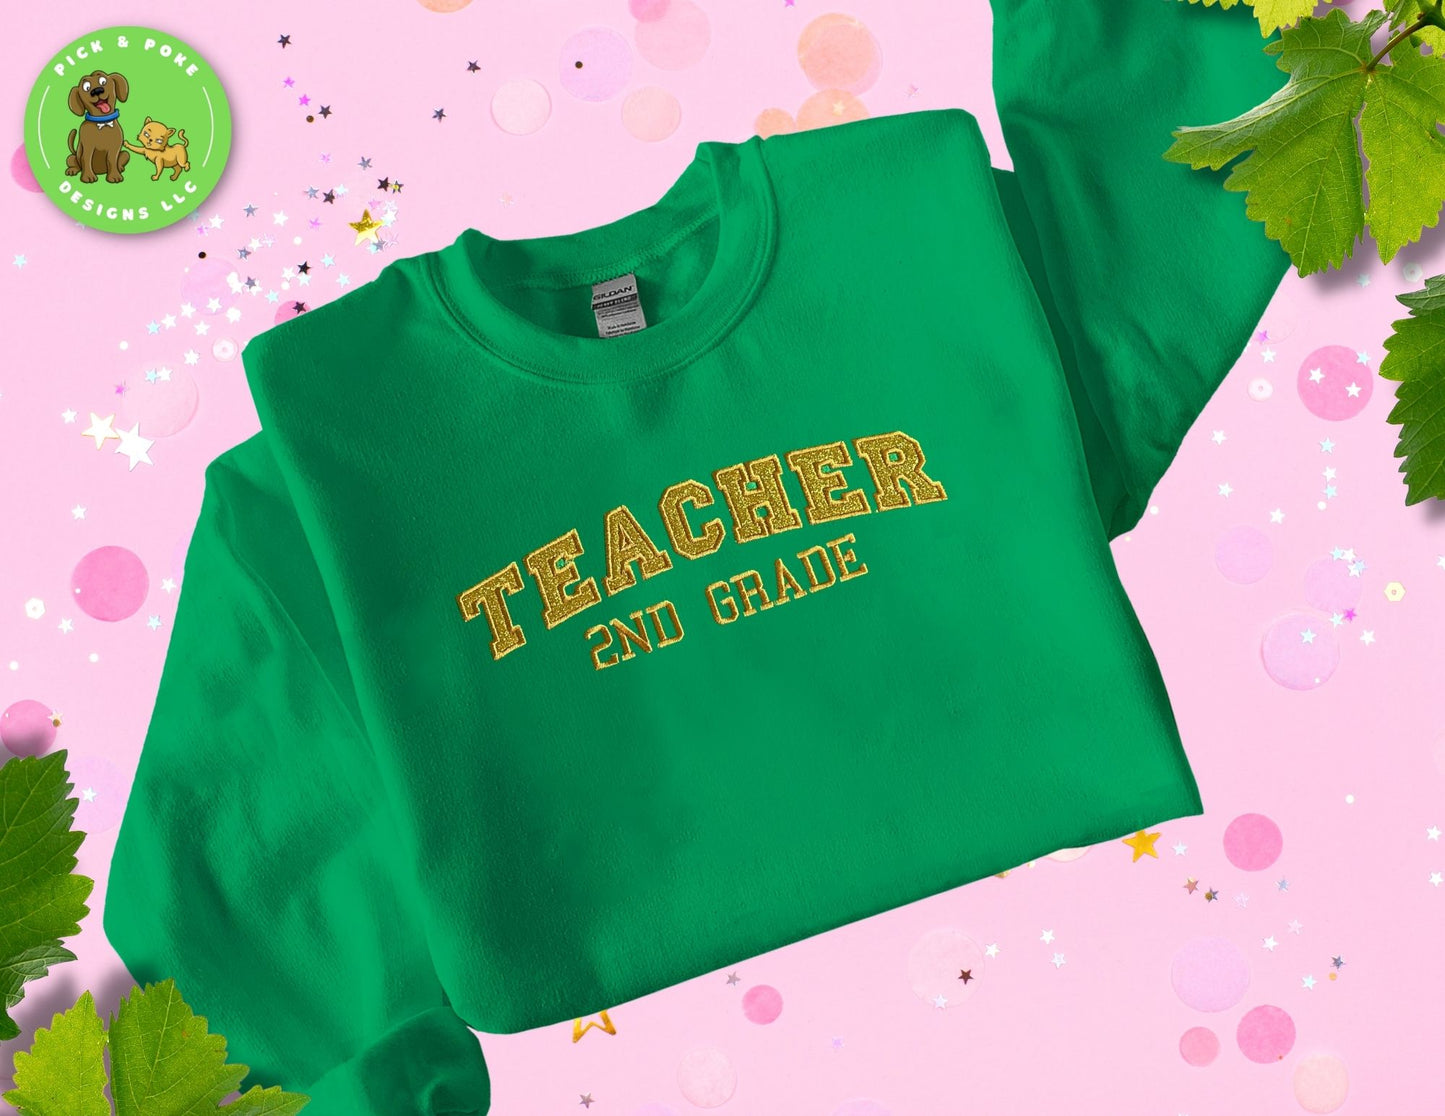 Green sweatshirt with golden text that reads 'Teacher' and the words 'Second Grade' below it